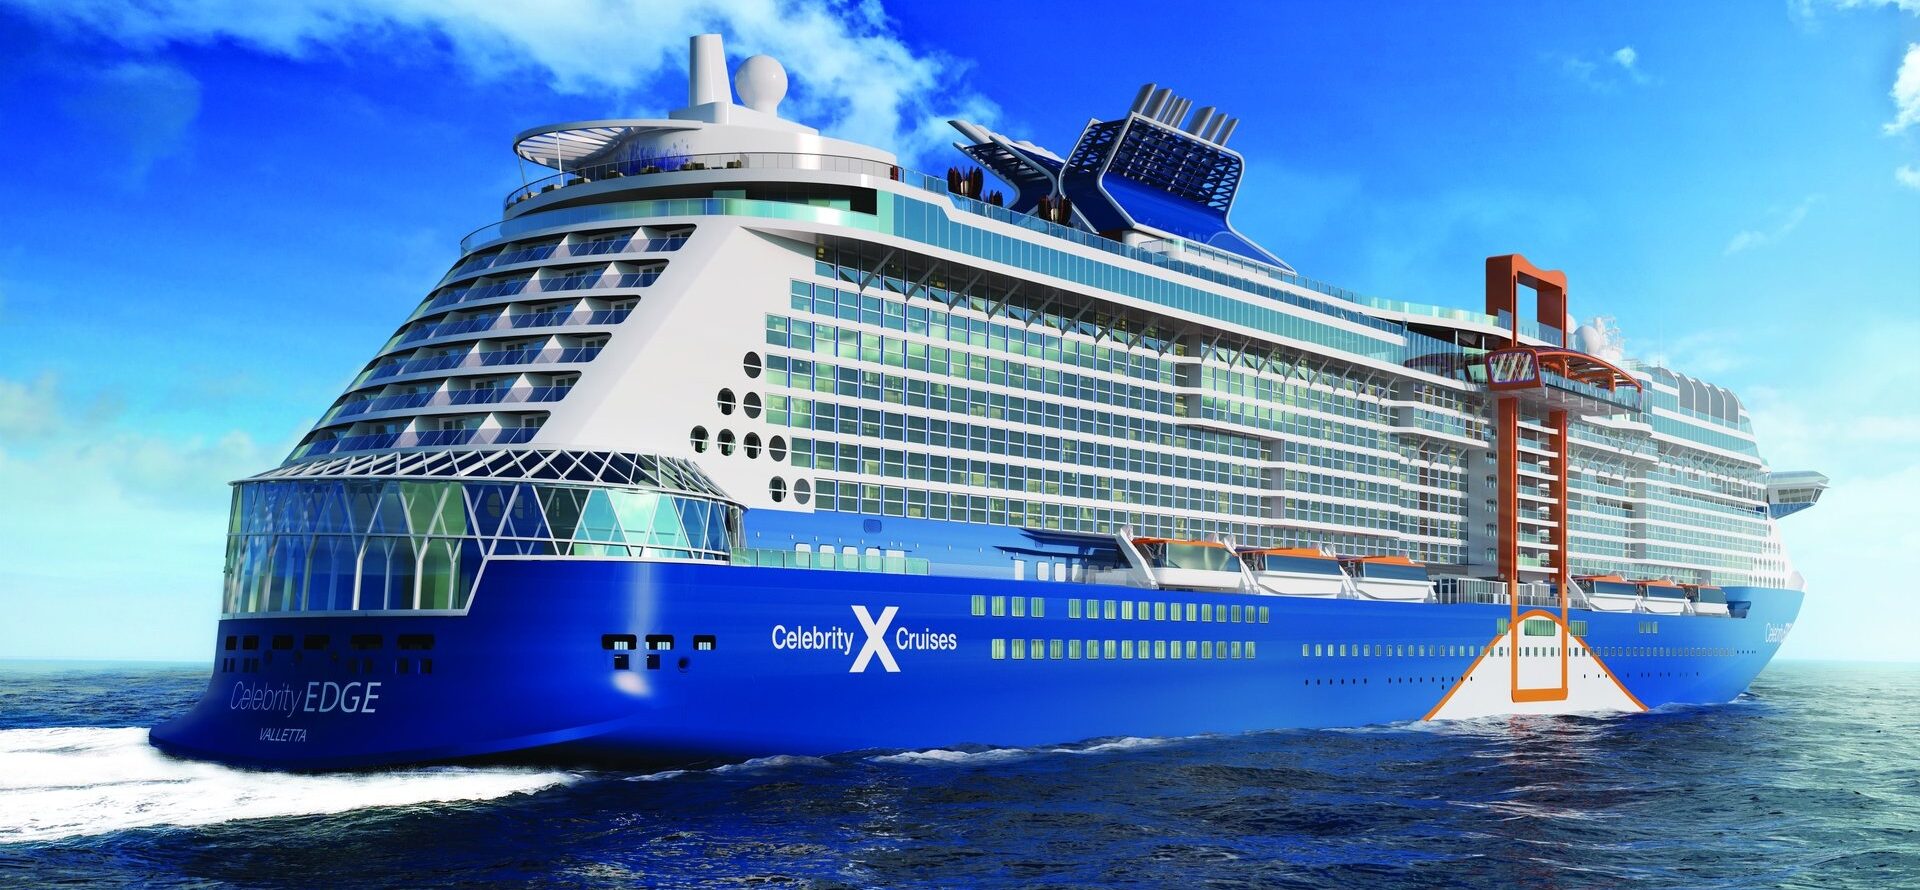 Celebrity Edge Itinerary: The Caribbean, Europe, &amp; Beyond | Celebrity Cruises